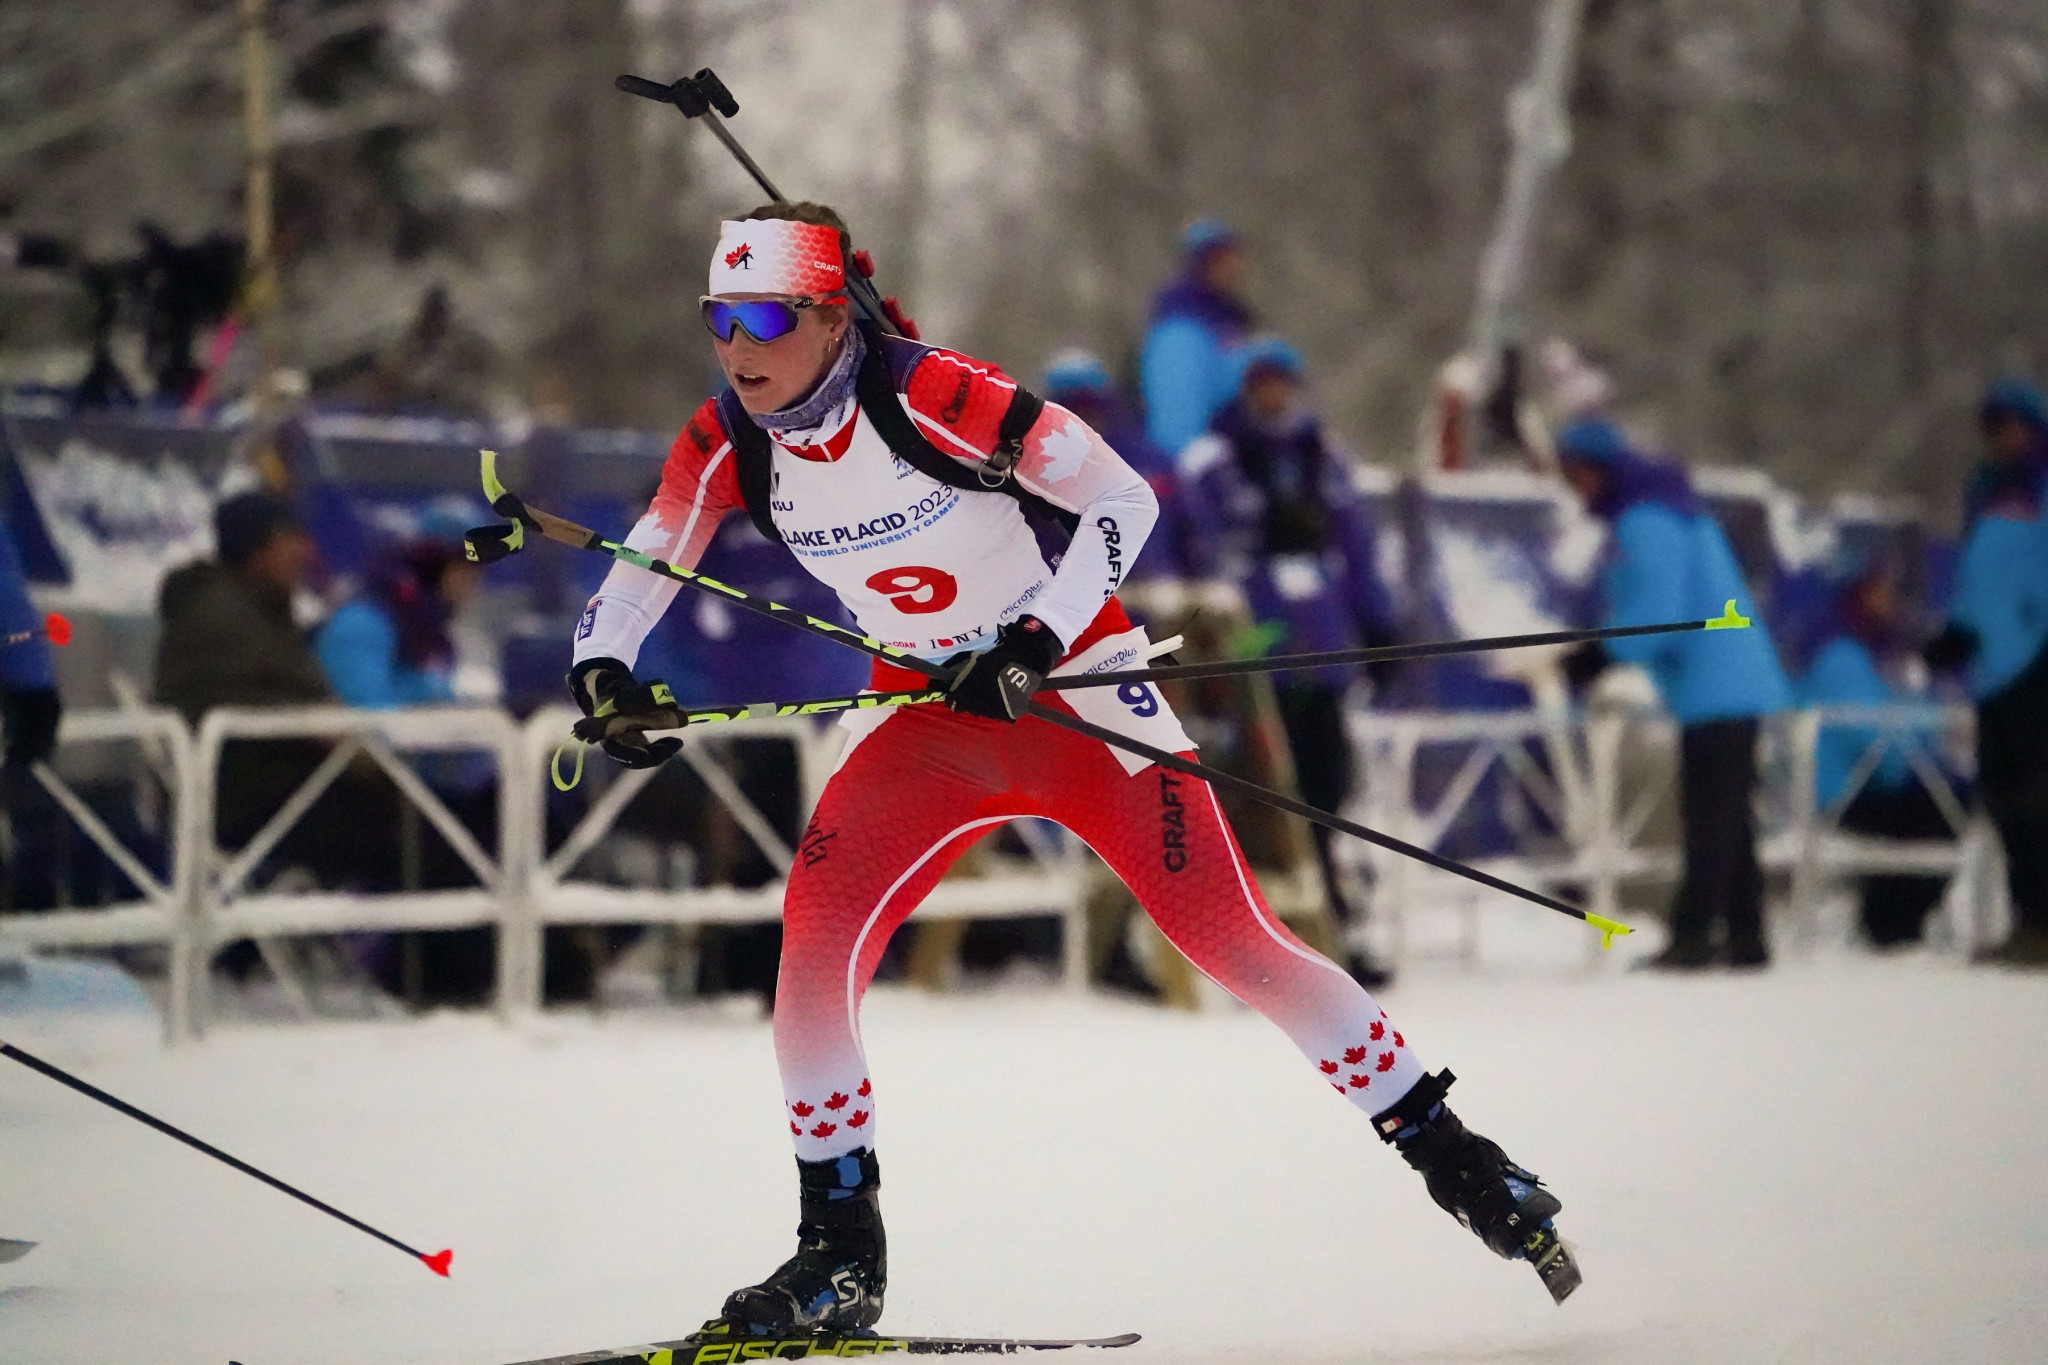 Shilo Rousseau missed just two of 20 shots as she won biathlon gold at Mount Van Hoevenberg ©FISU